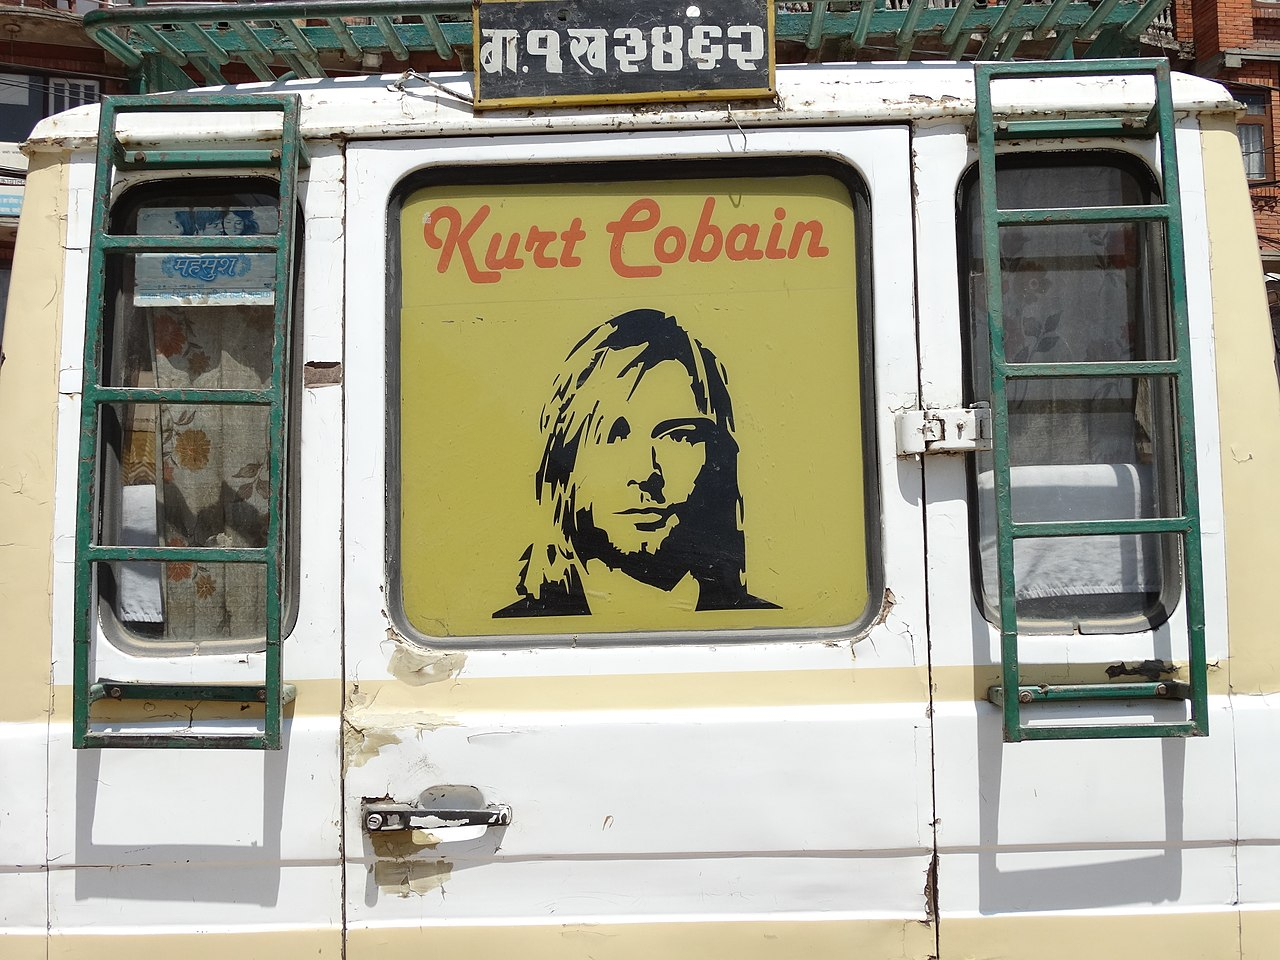 Commemoration to Kurt Cobain on a minivan in Nepal.